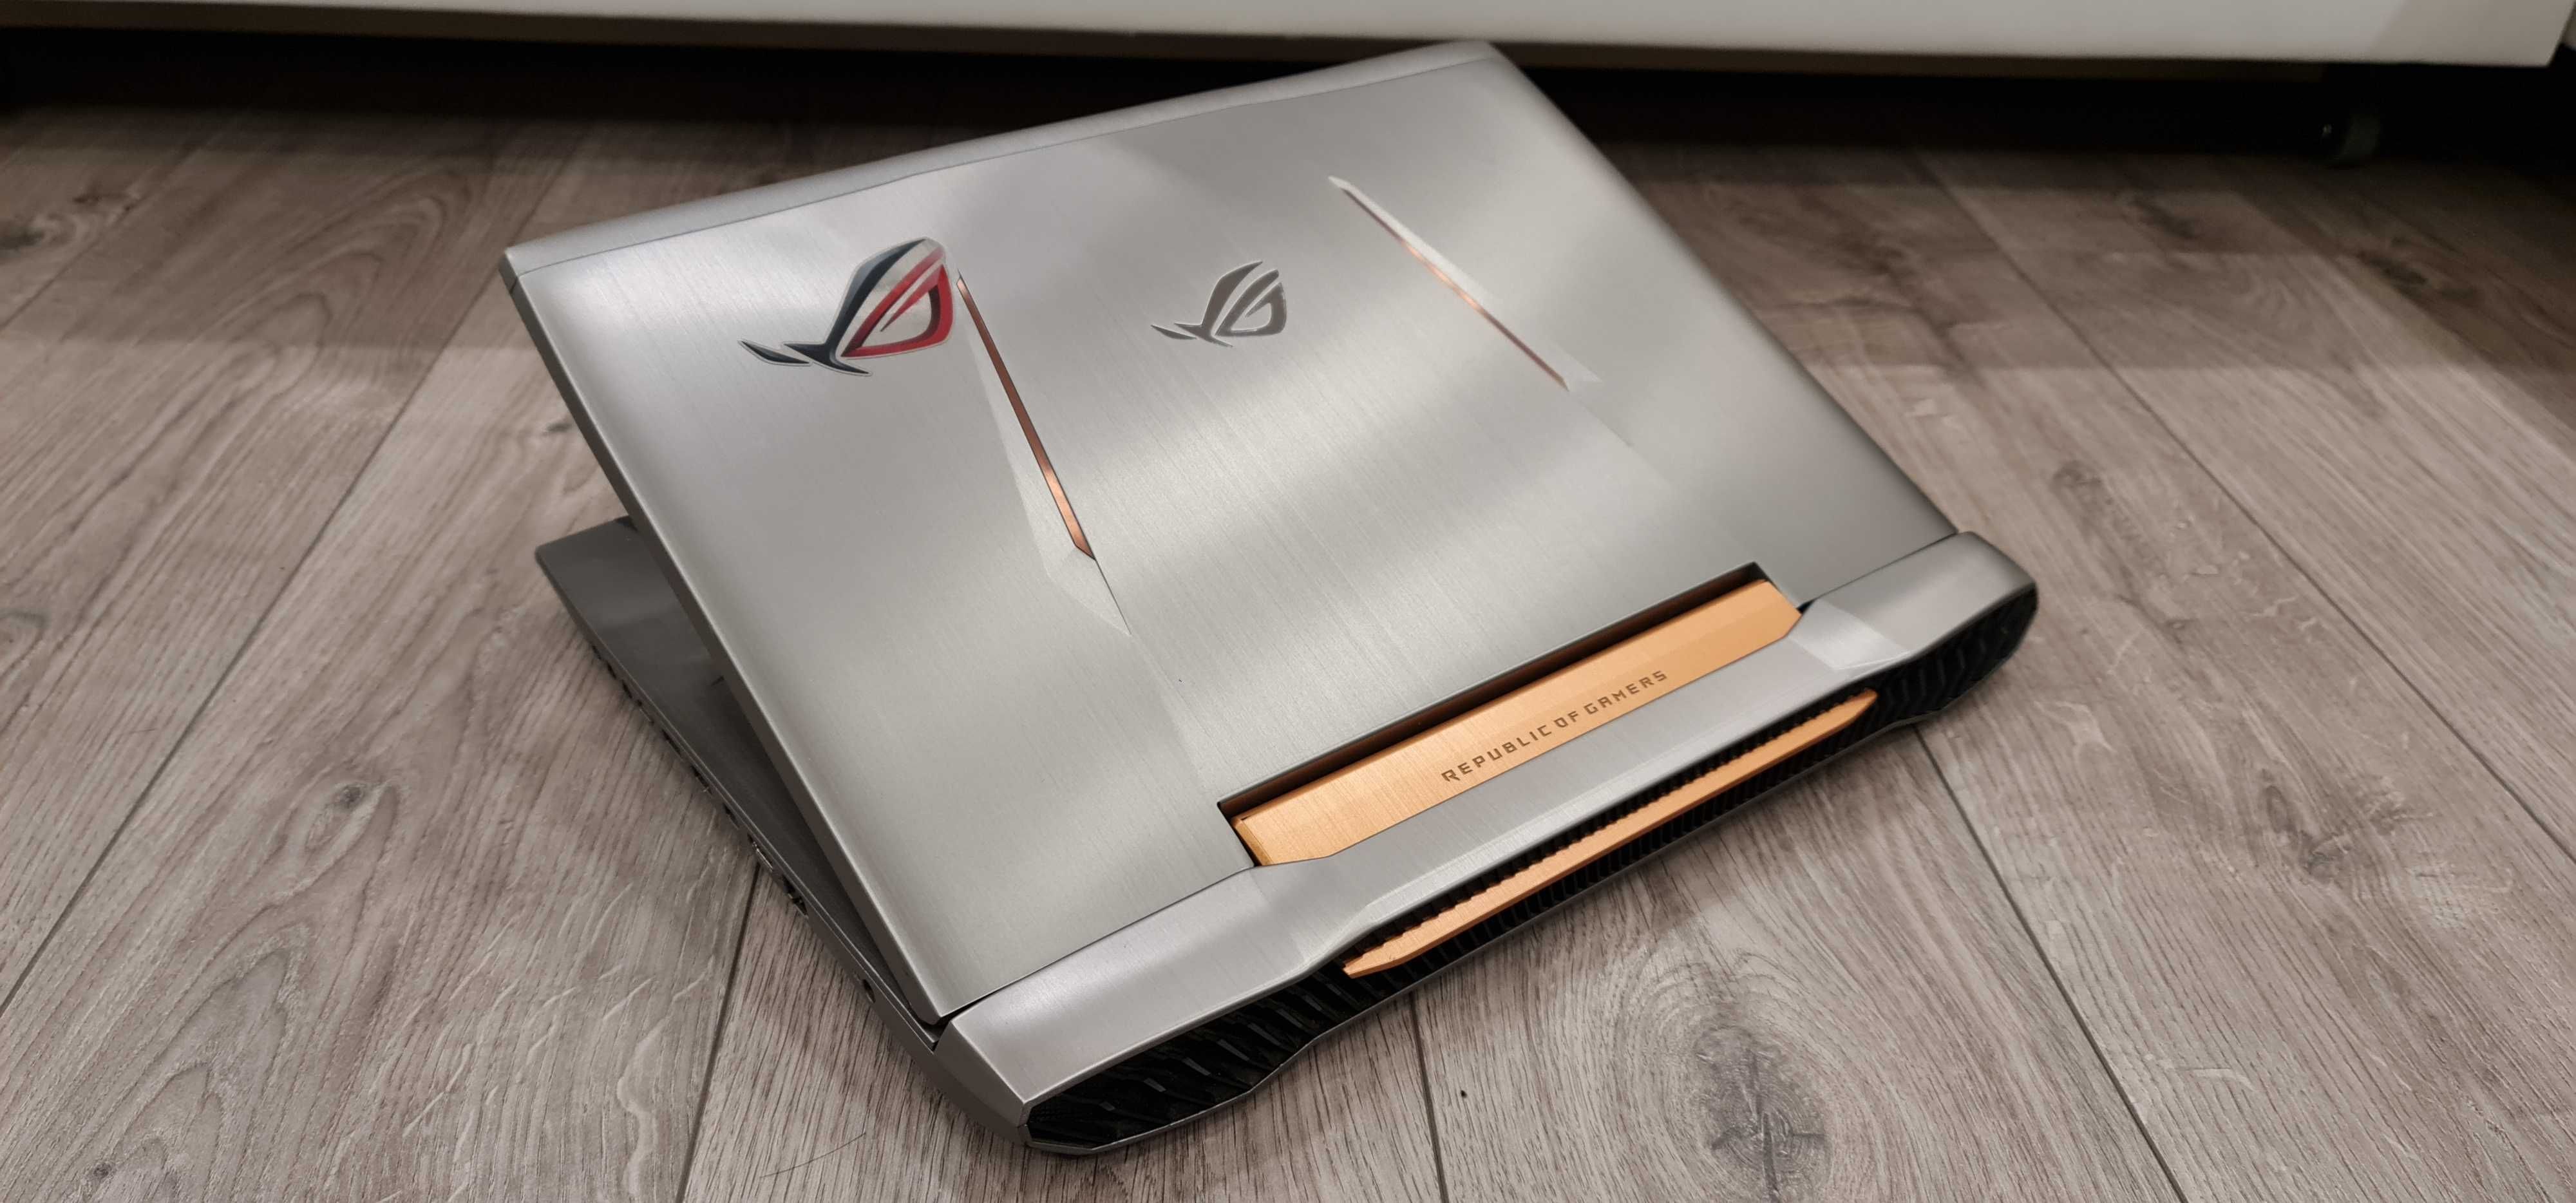 Laptop gaming Asus ROG intel core i7-, video 6 gb nvidia , 17,3 inch